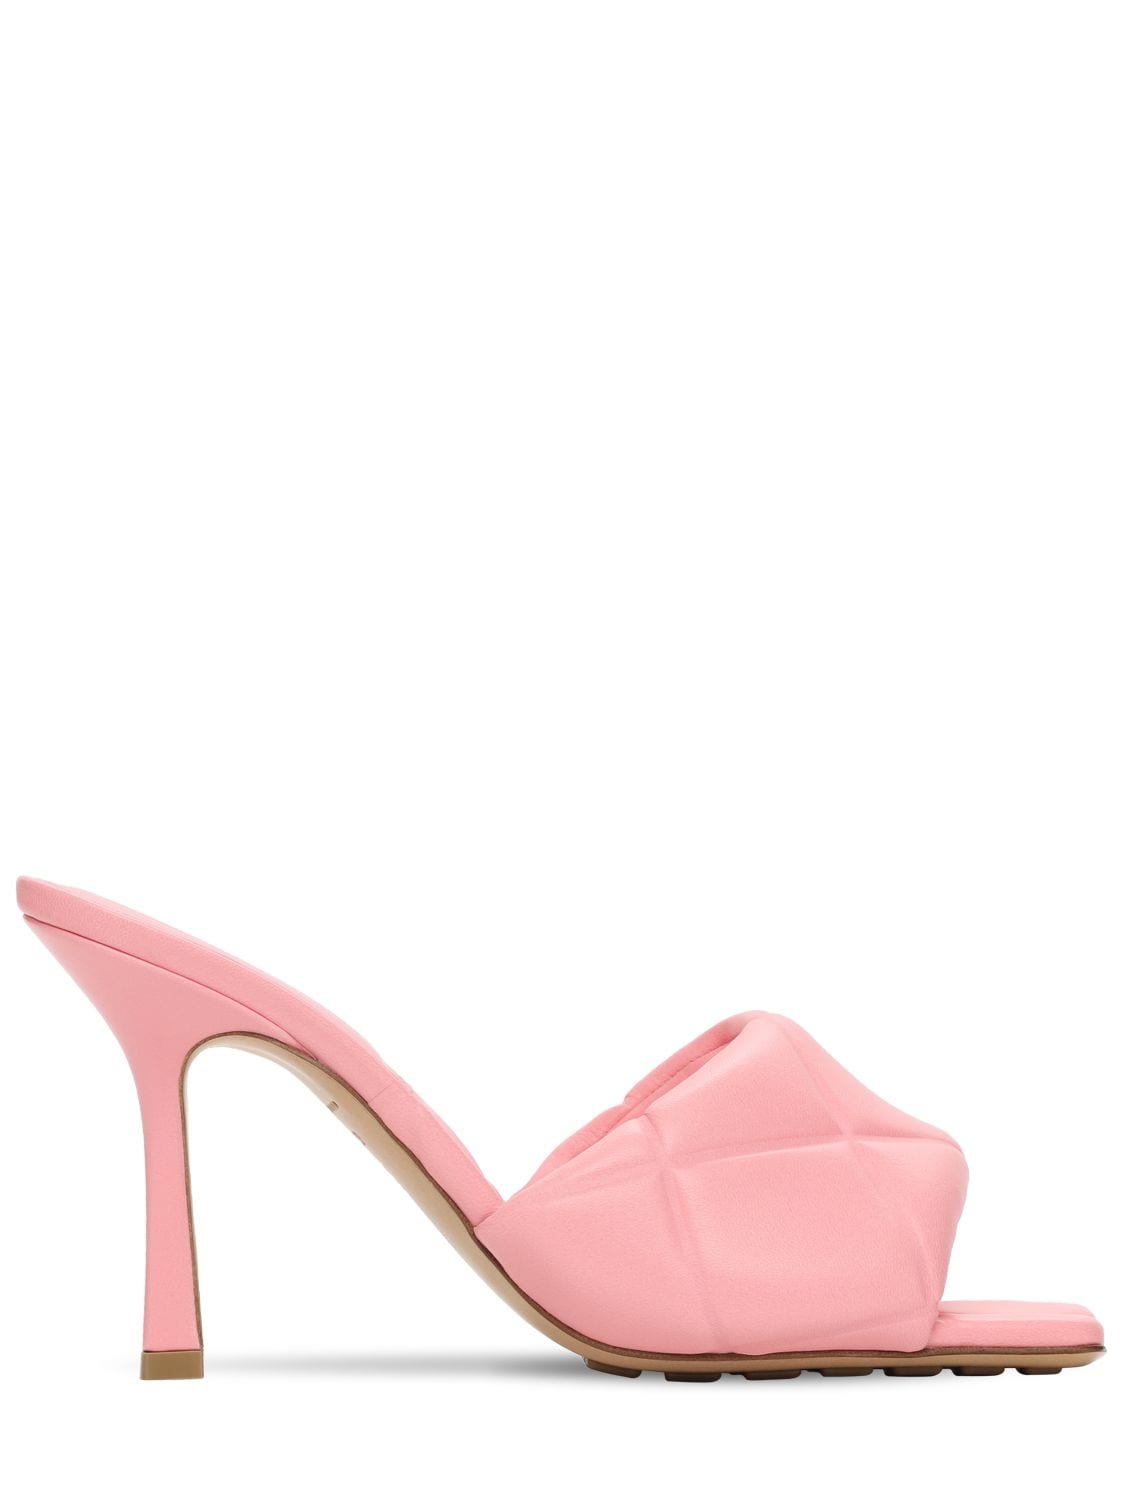 Bottega Veneta The Rubber Lido High-heel Sandals In Pink | ModeSens